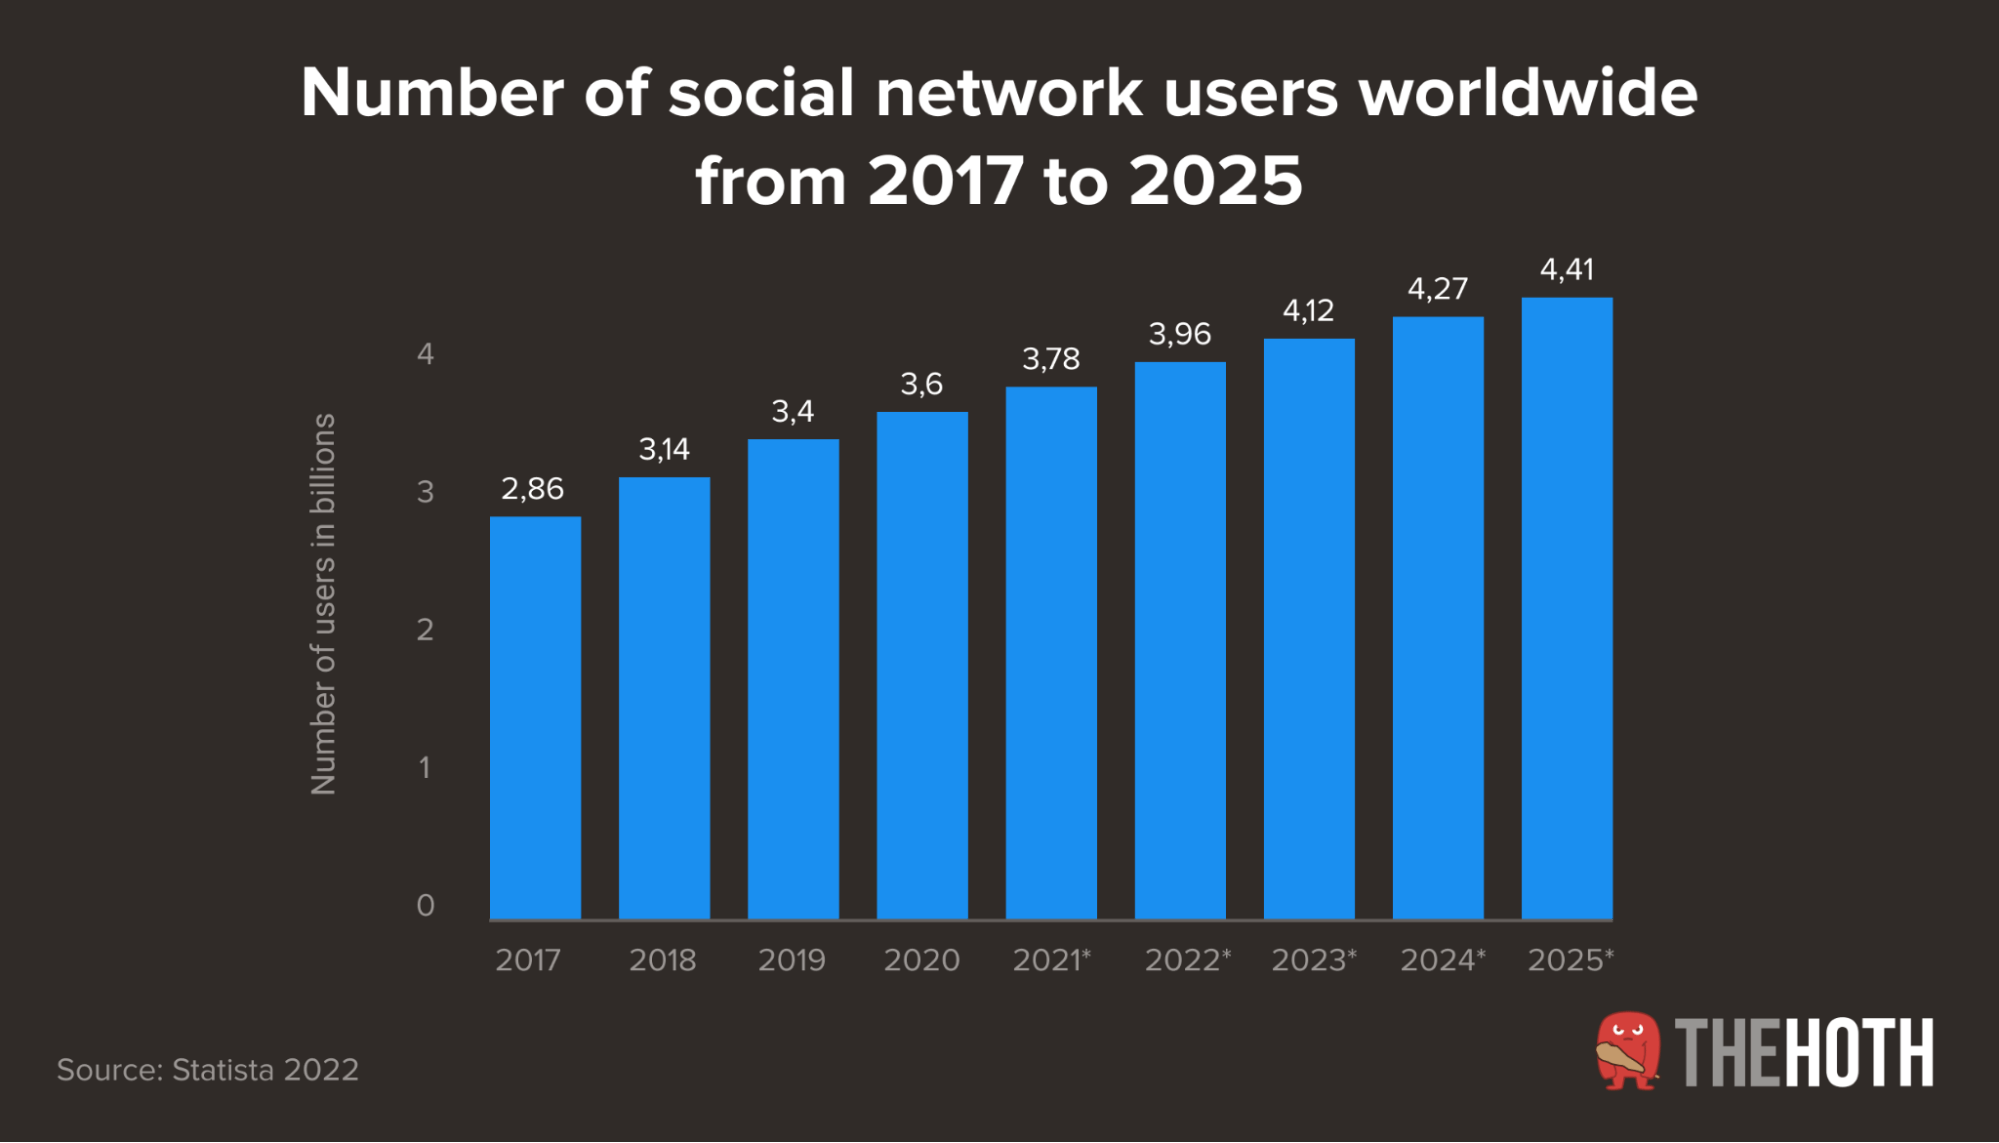 Global social media user growth through 2025